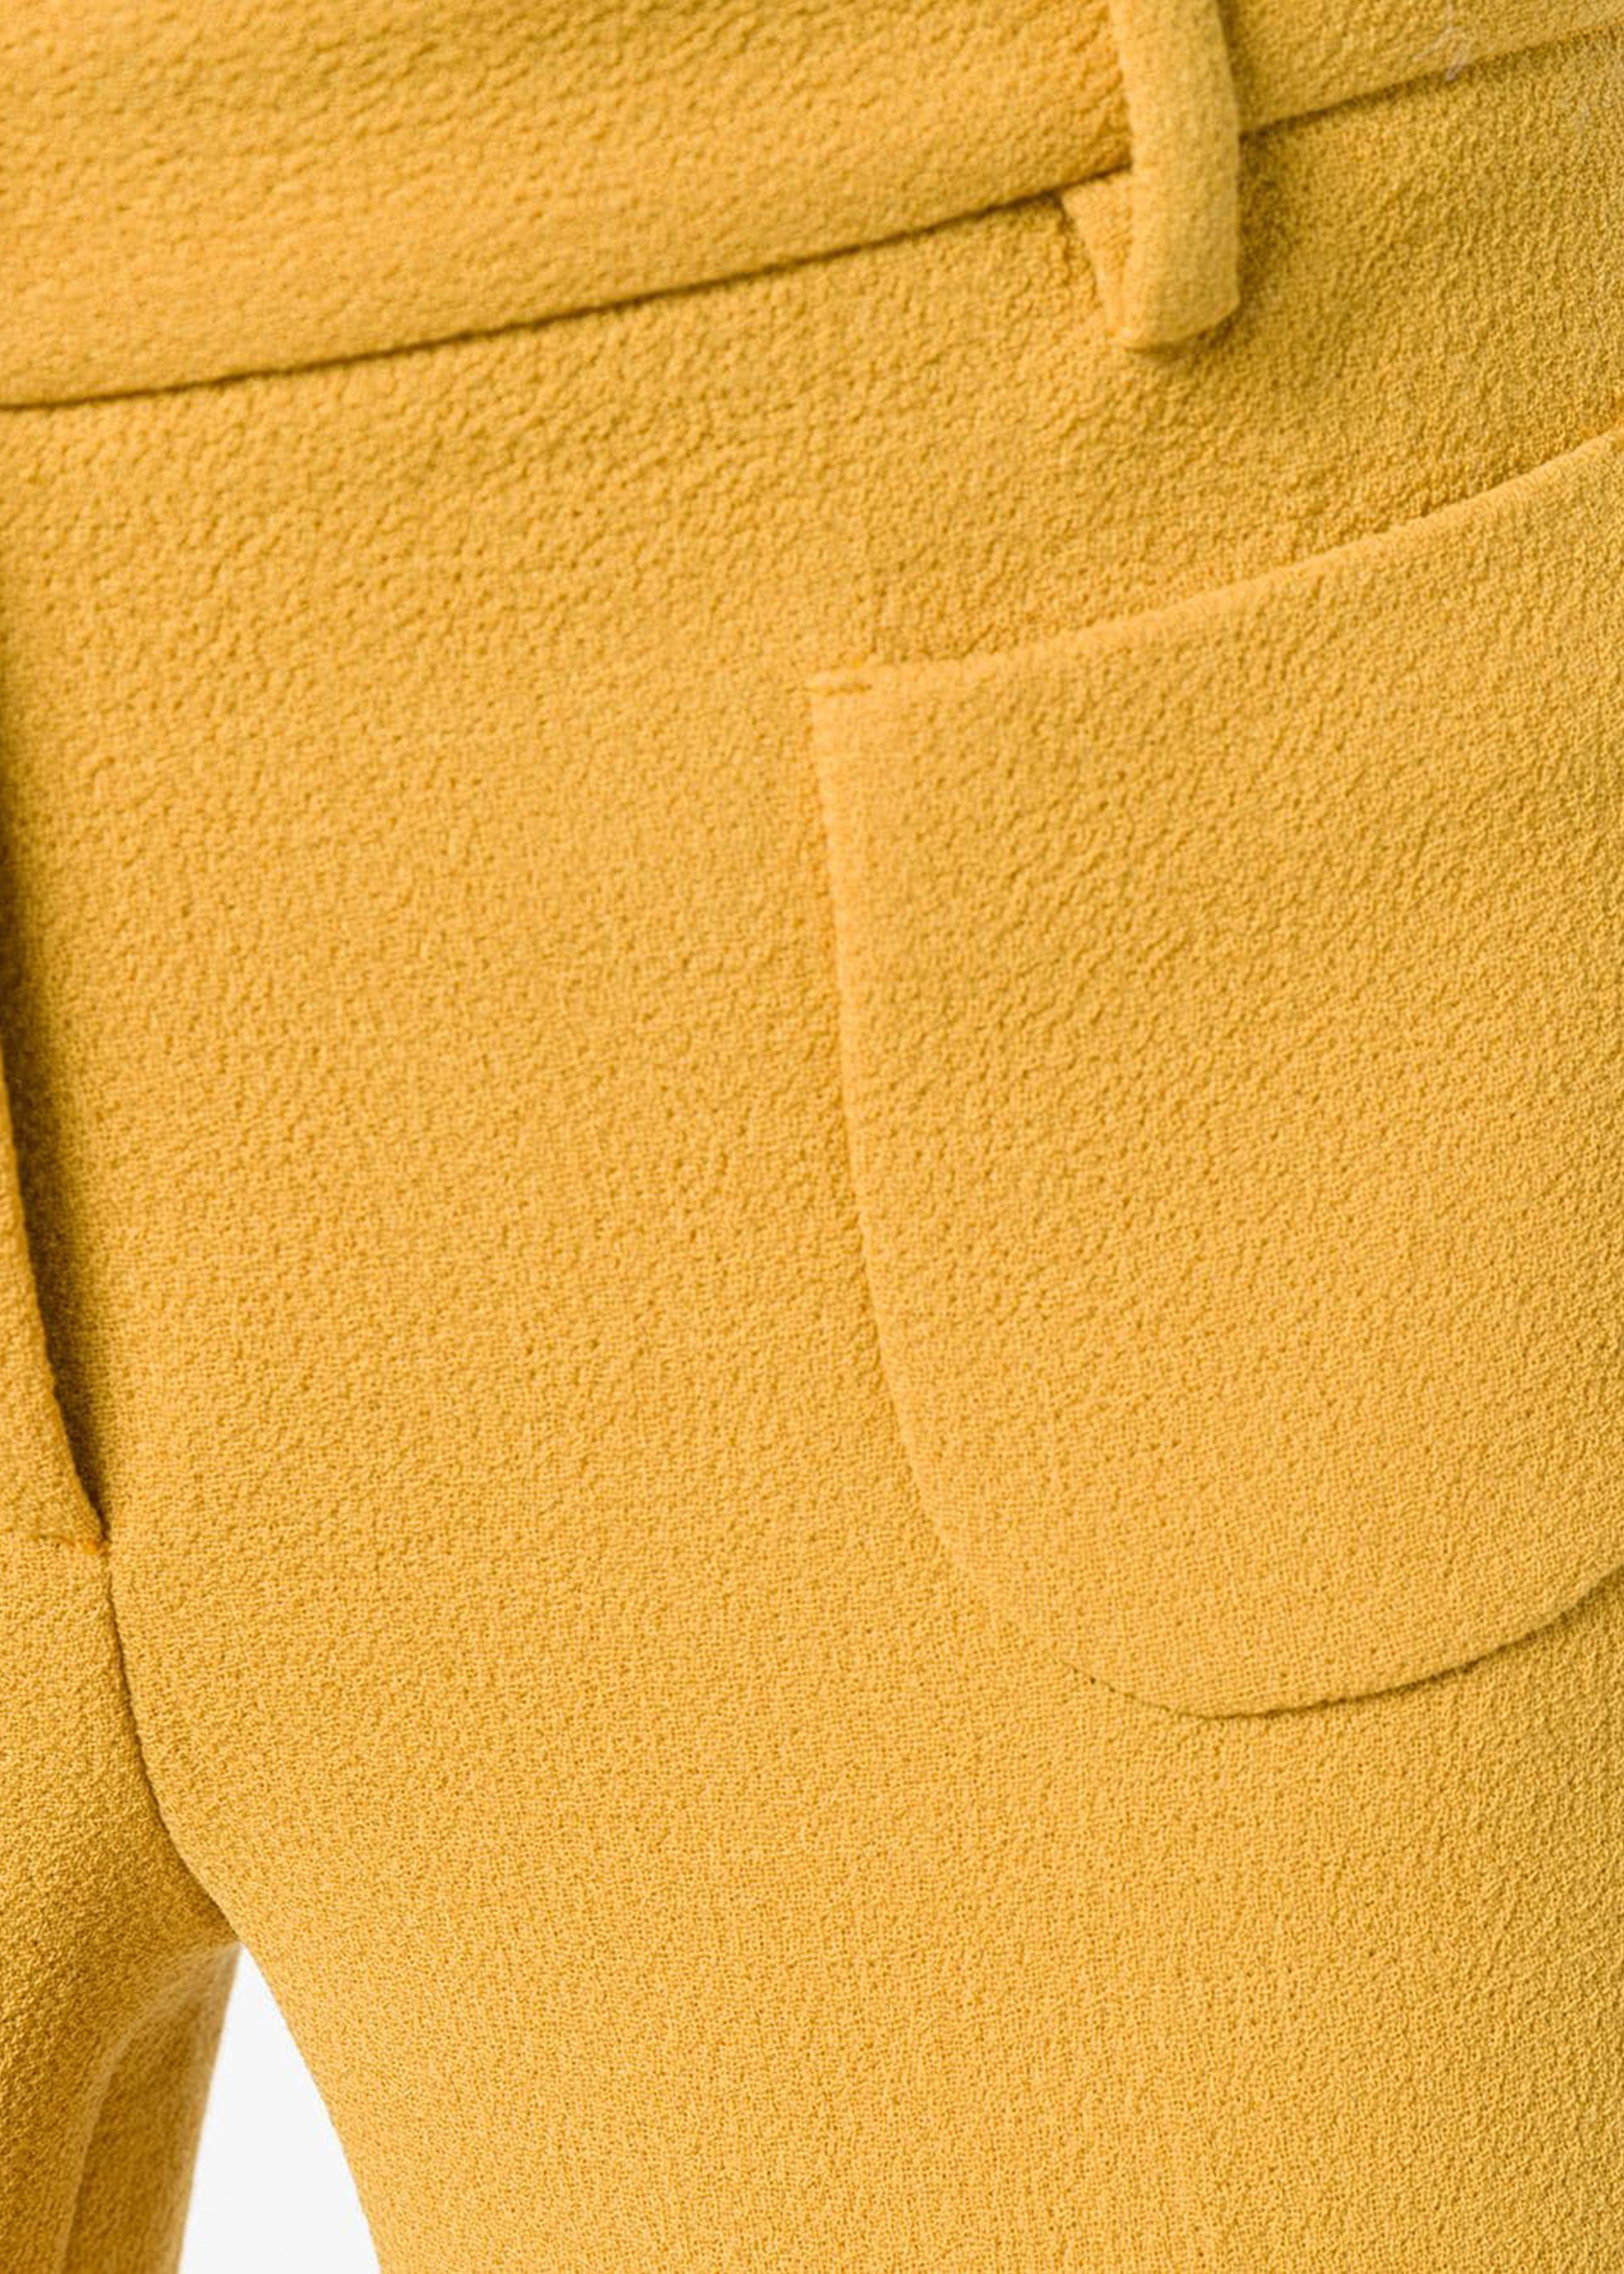 Pantalone crop lana giallo